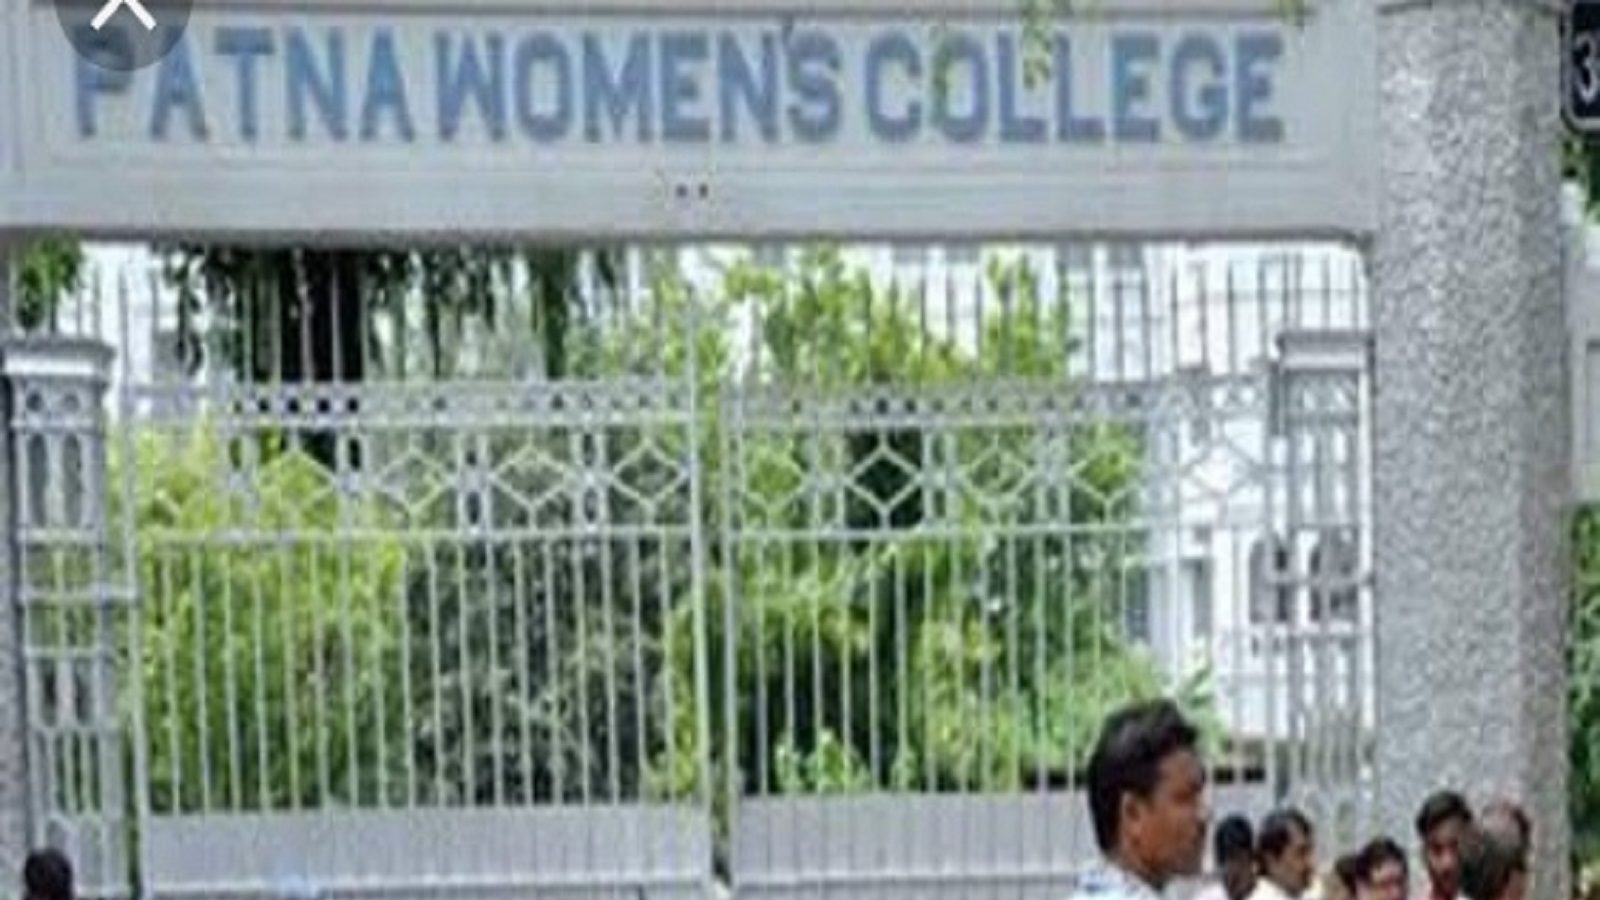 Patna Women's College 💗 Credit @theheavenbihar @clouds.say.hello_ #BeGarda  @gardapatna #pwc #patnawomenscollege #patna #bihar | Instagram